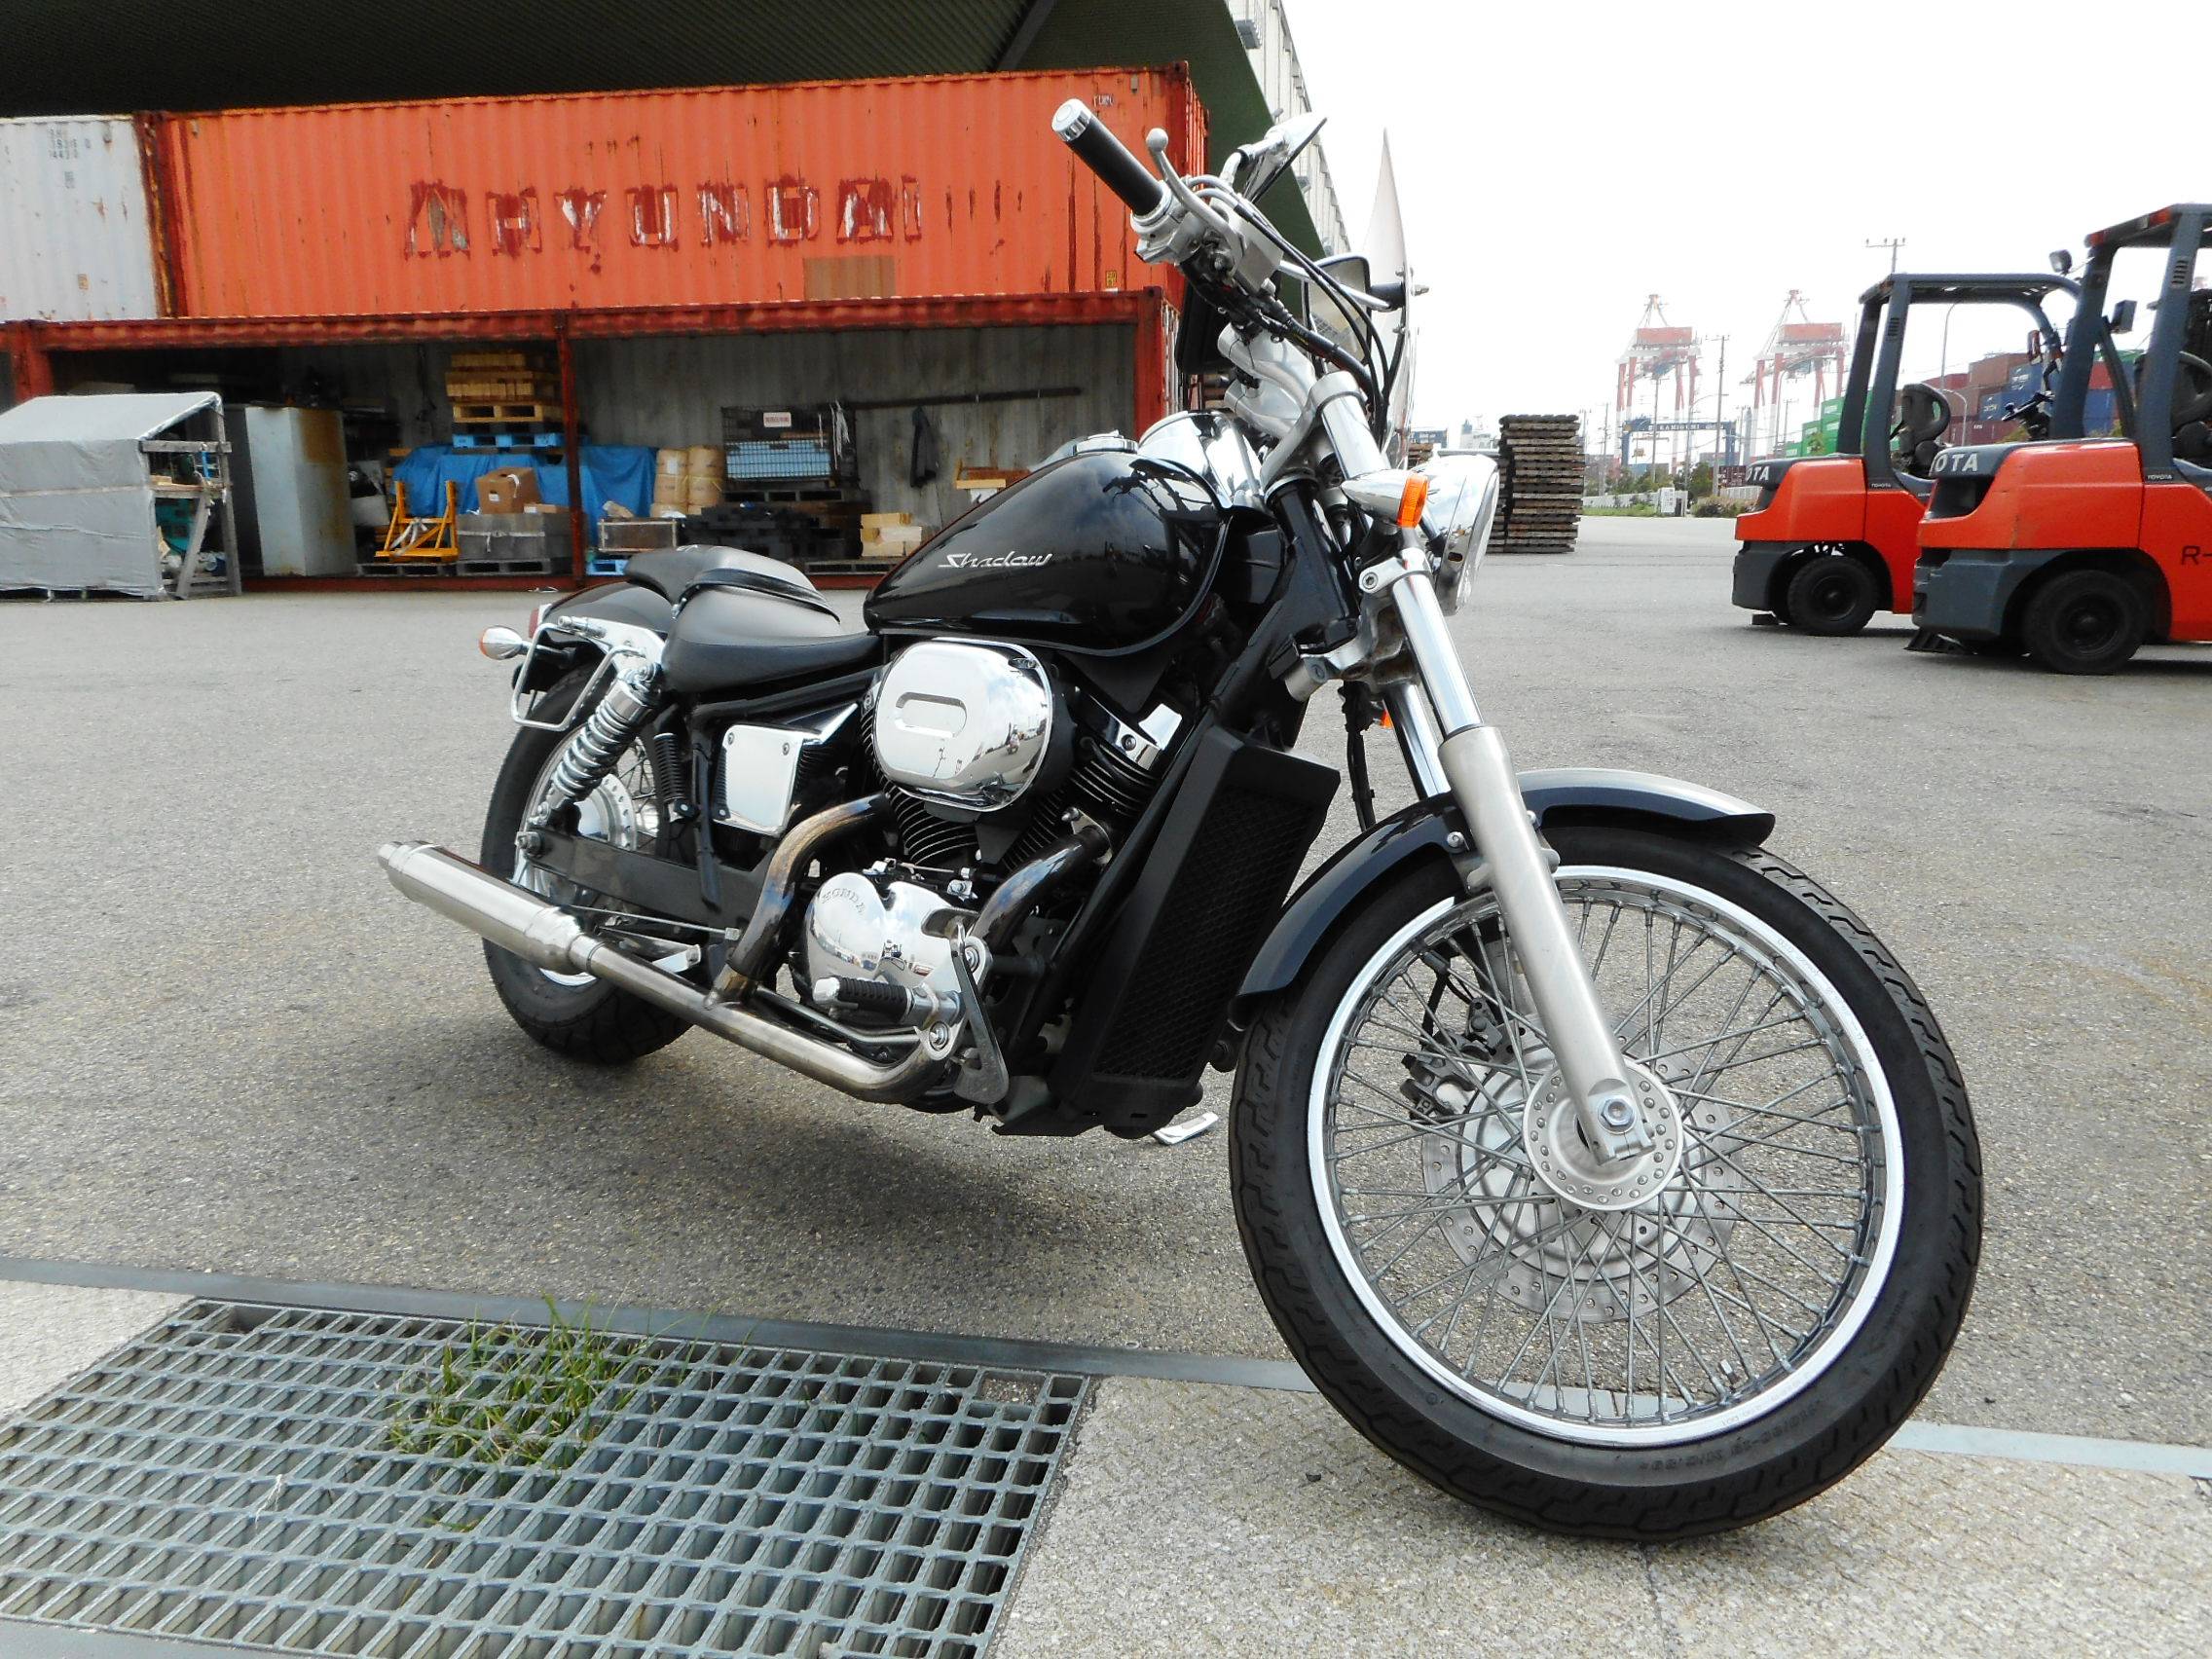 Мотоцикл honda vt 400 shadow slasher - хороший классический круизер